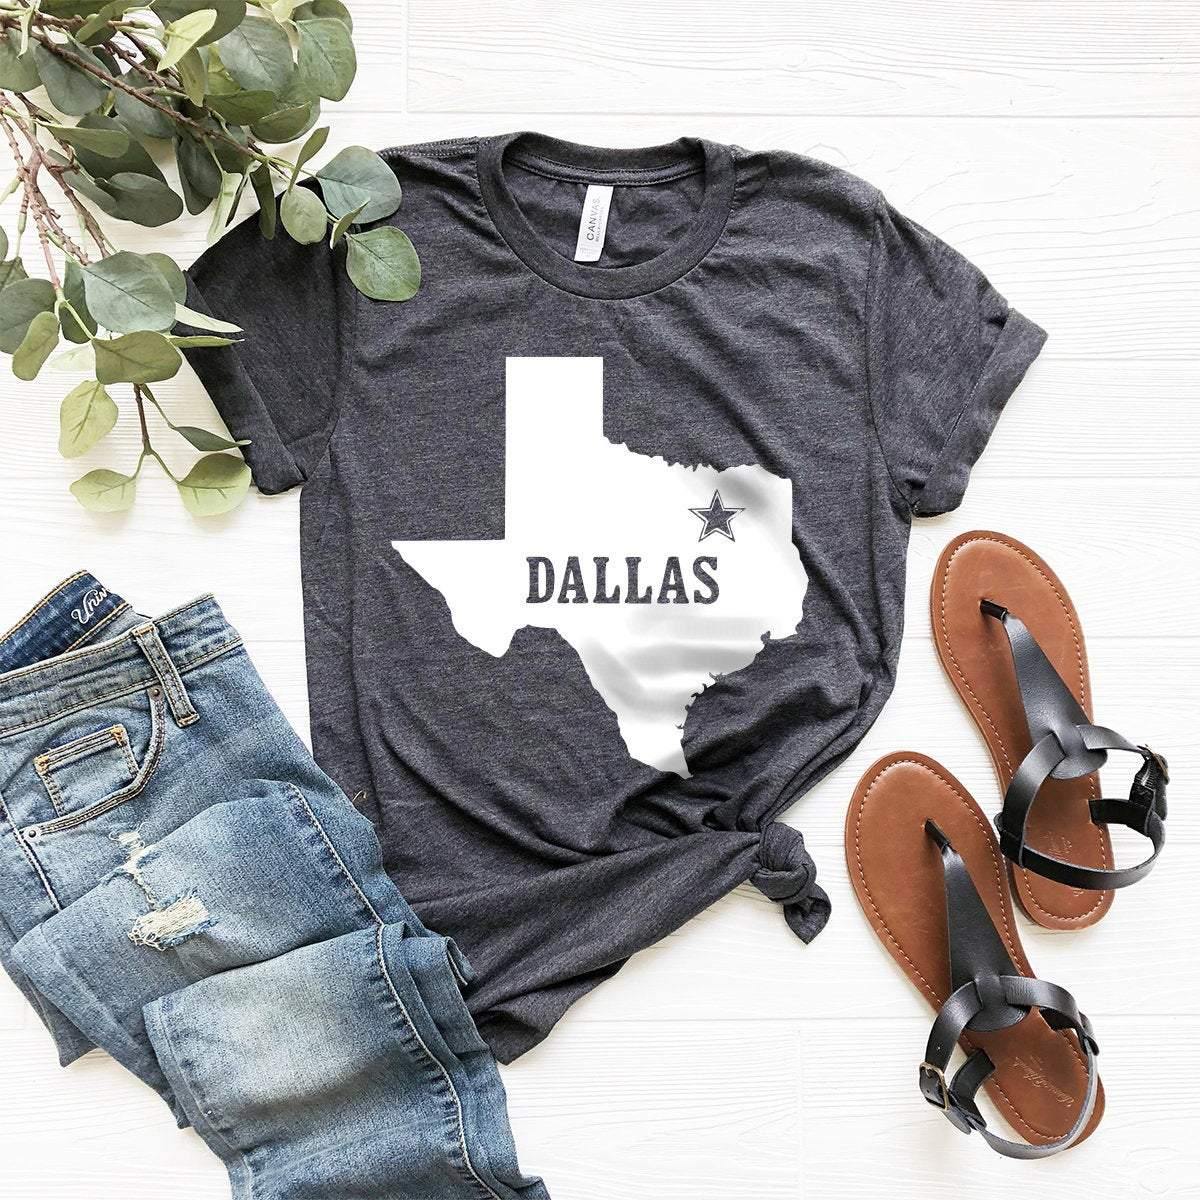 Dallas Texas T-Shirt, Texas City Shirt, Texas Cities Shirt, Texas Shirt, Dallas Map Shirt, Texas Outline Shirt, Dallas Outline Shirt - Fastdeliverytees.com